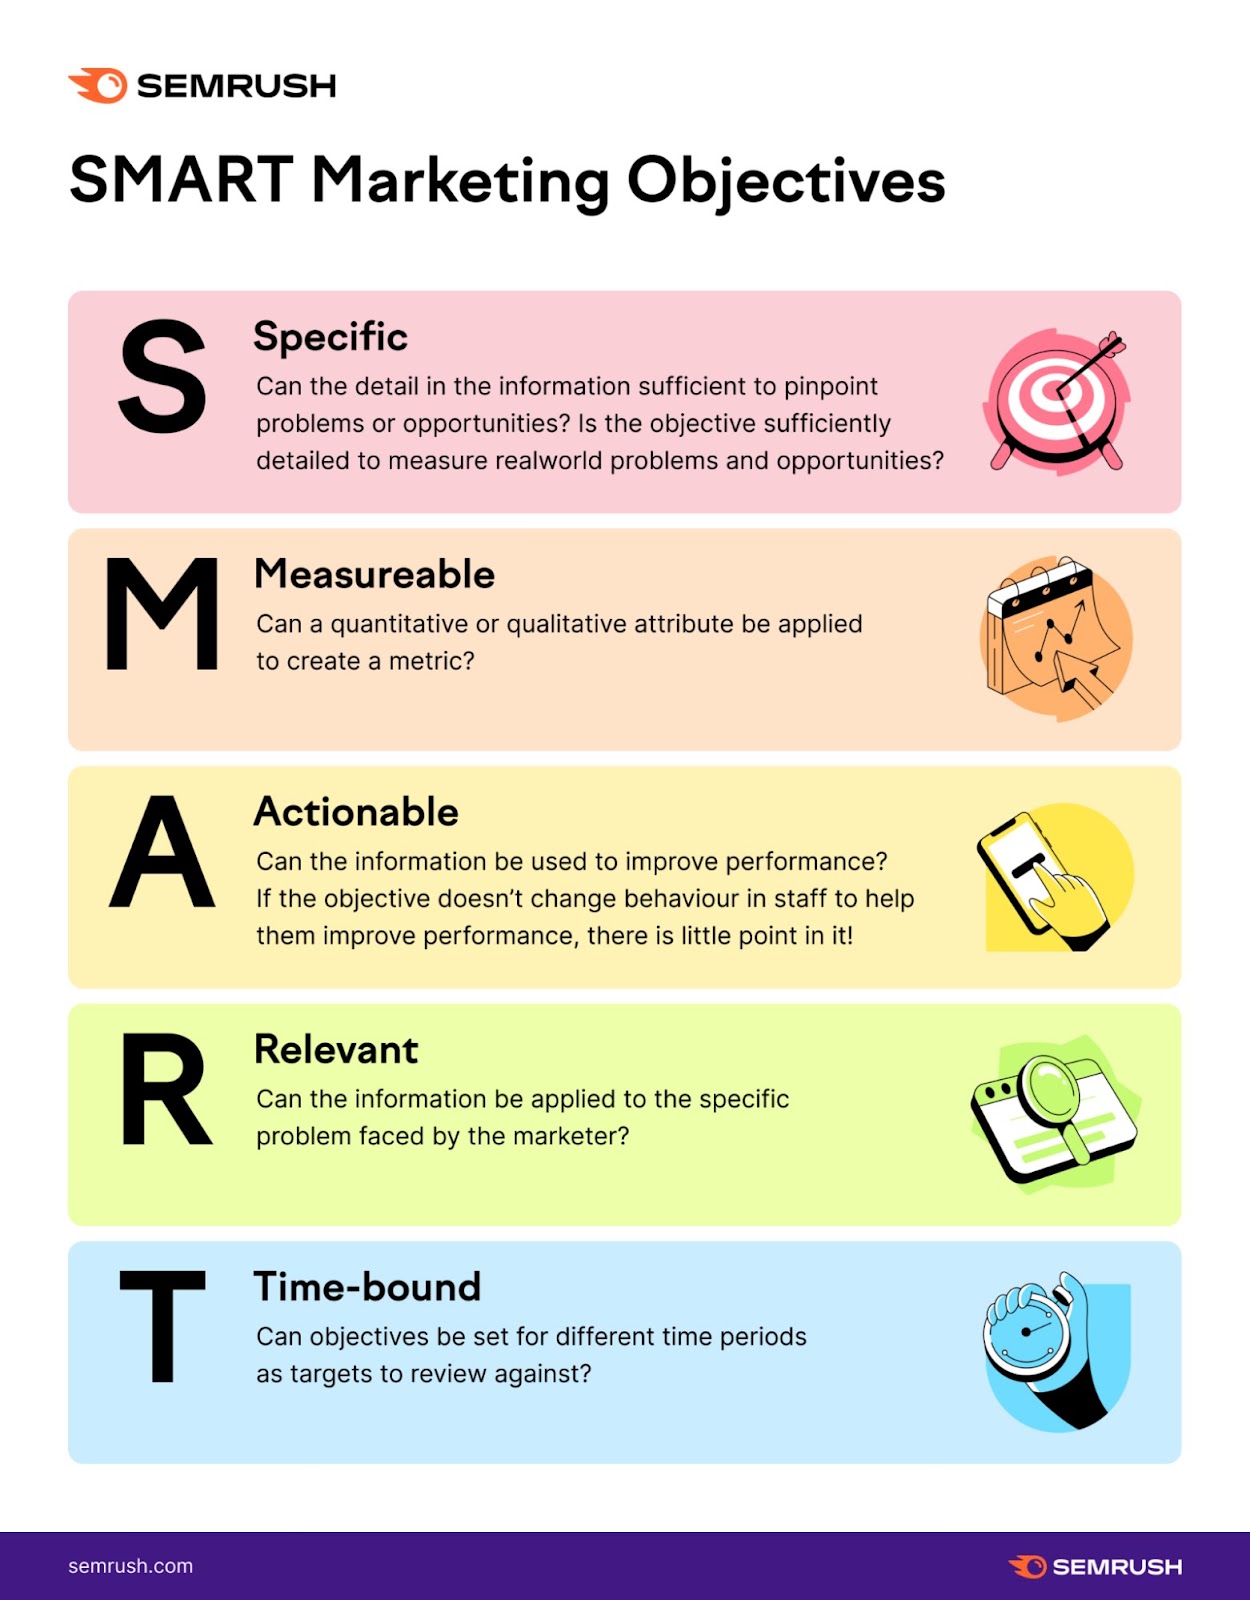 The SMART marketing objectives framework